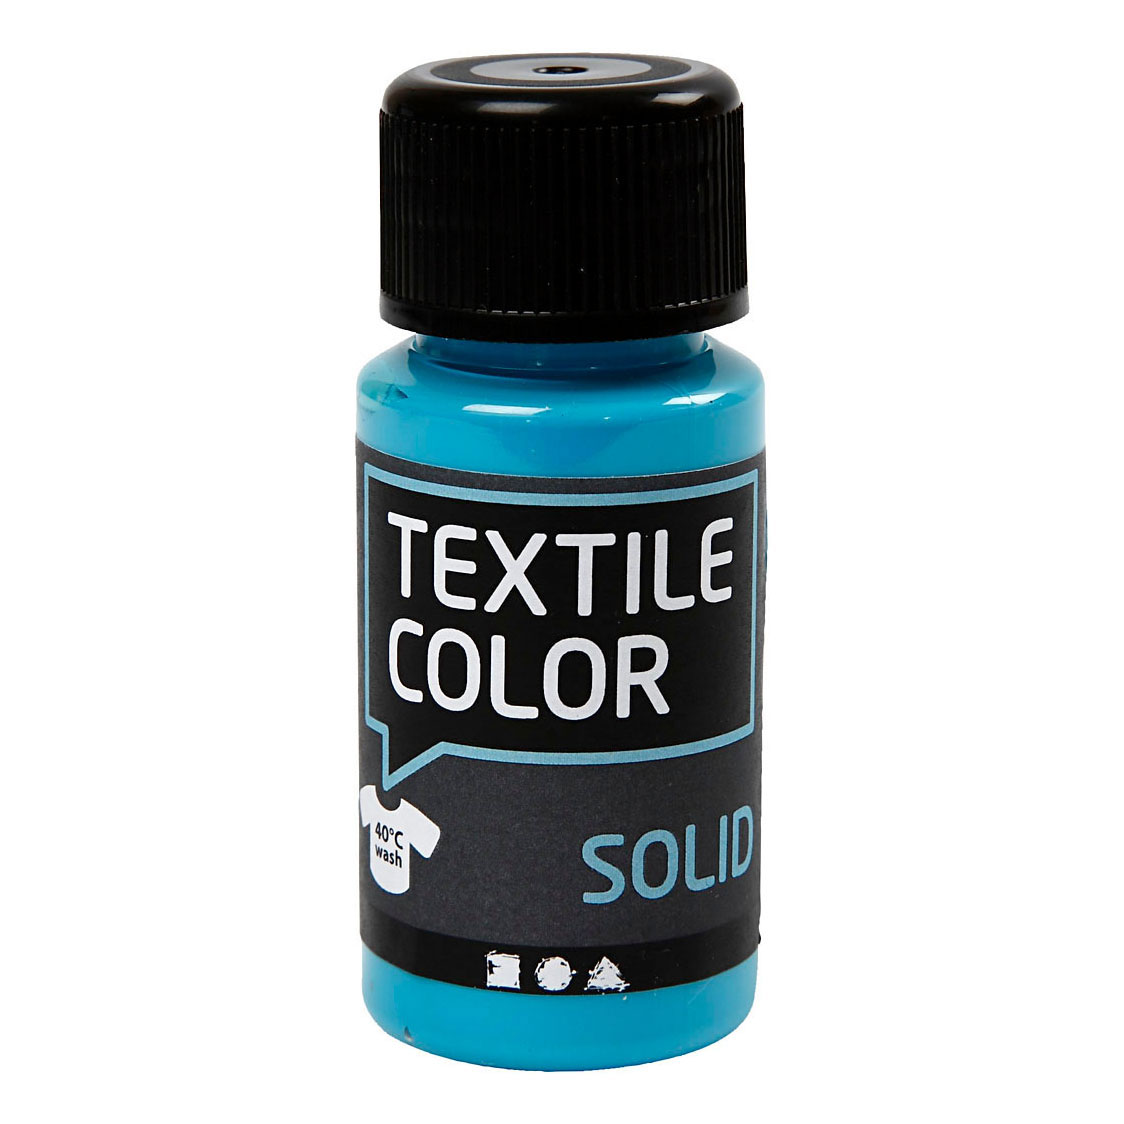 Textile Color Deckende Textilfarbe – Türkisblau, 50 ml